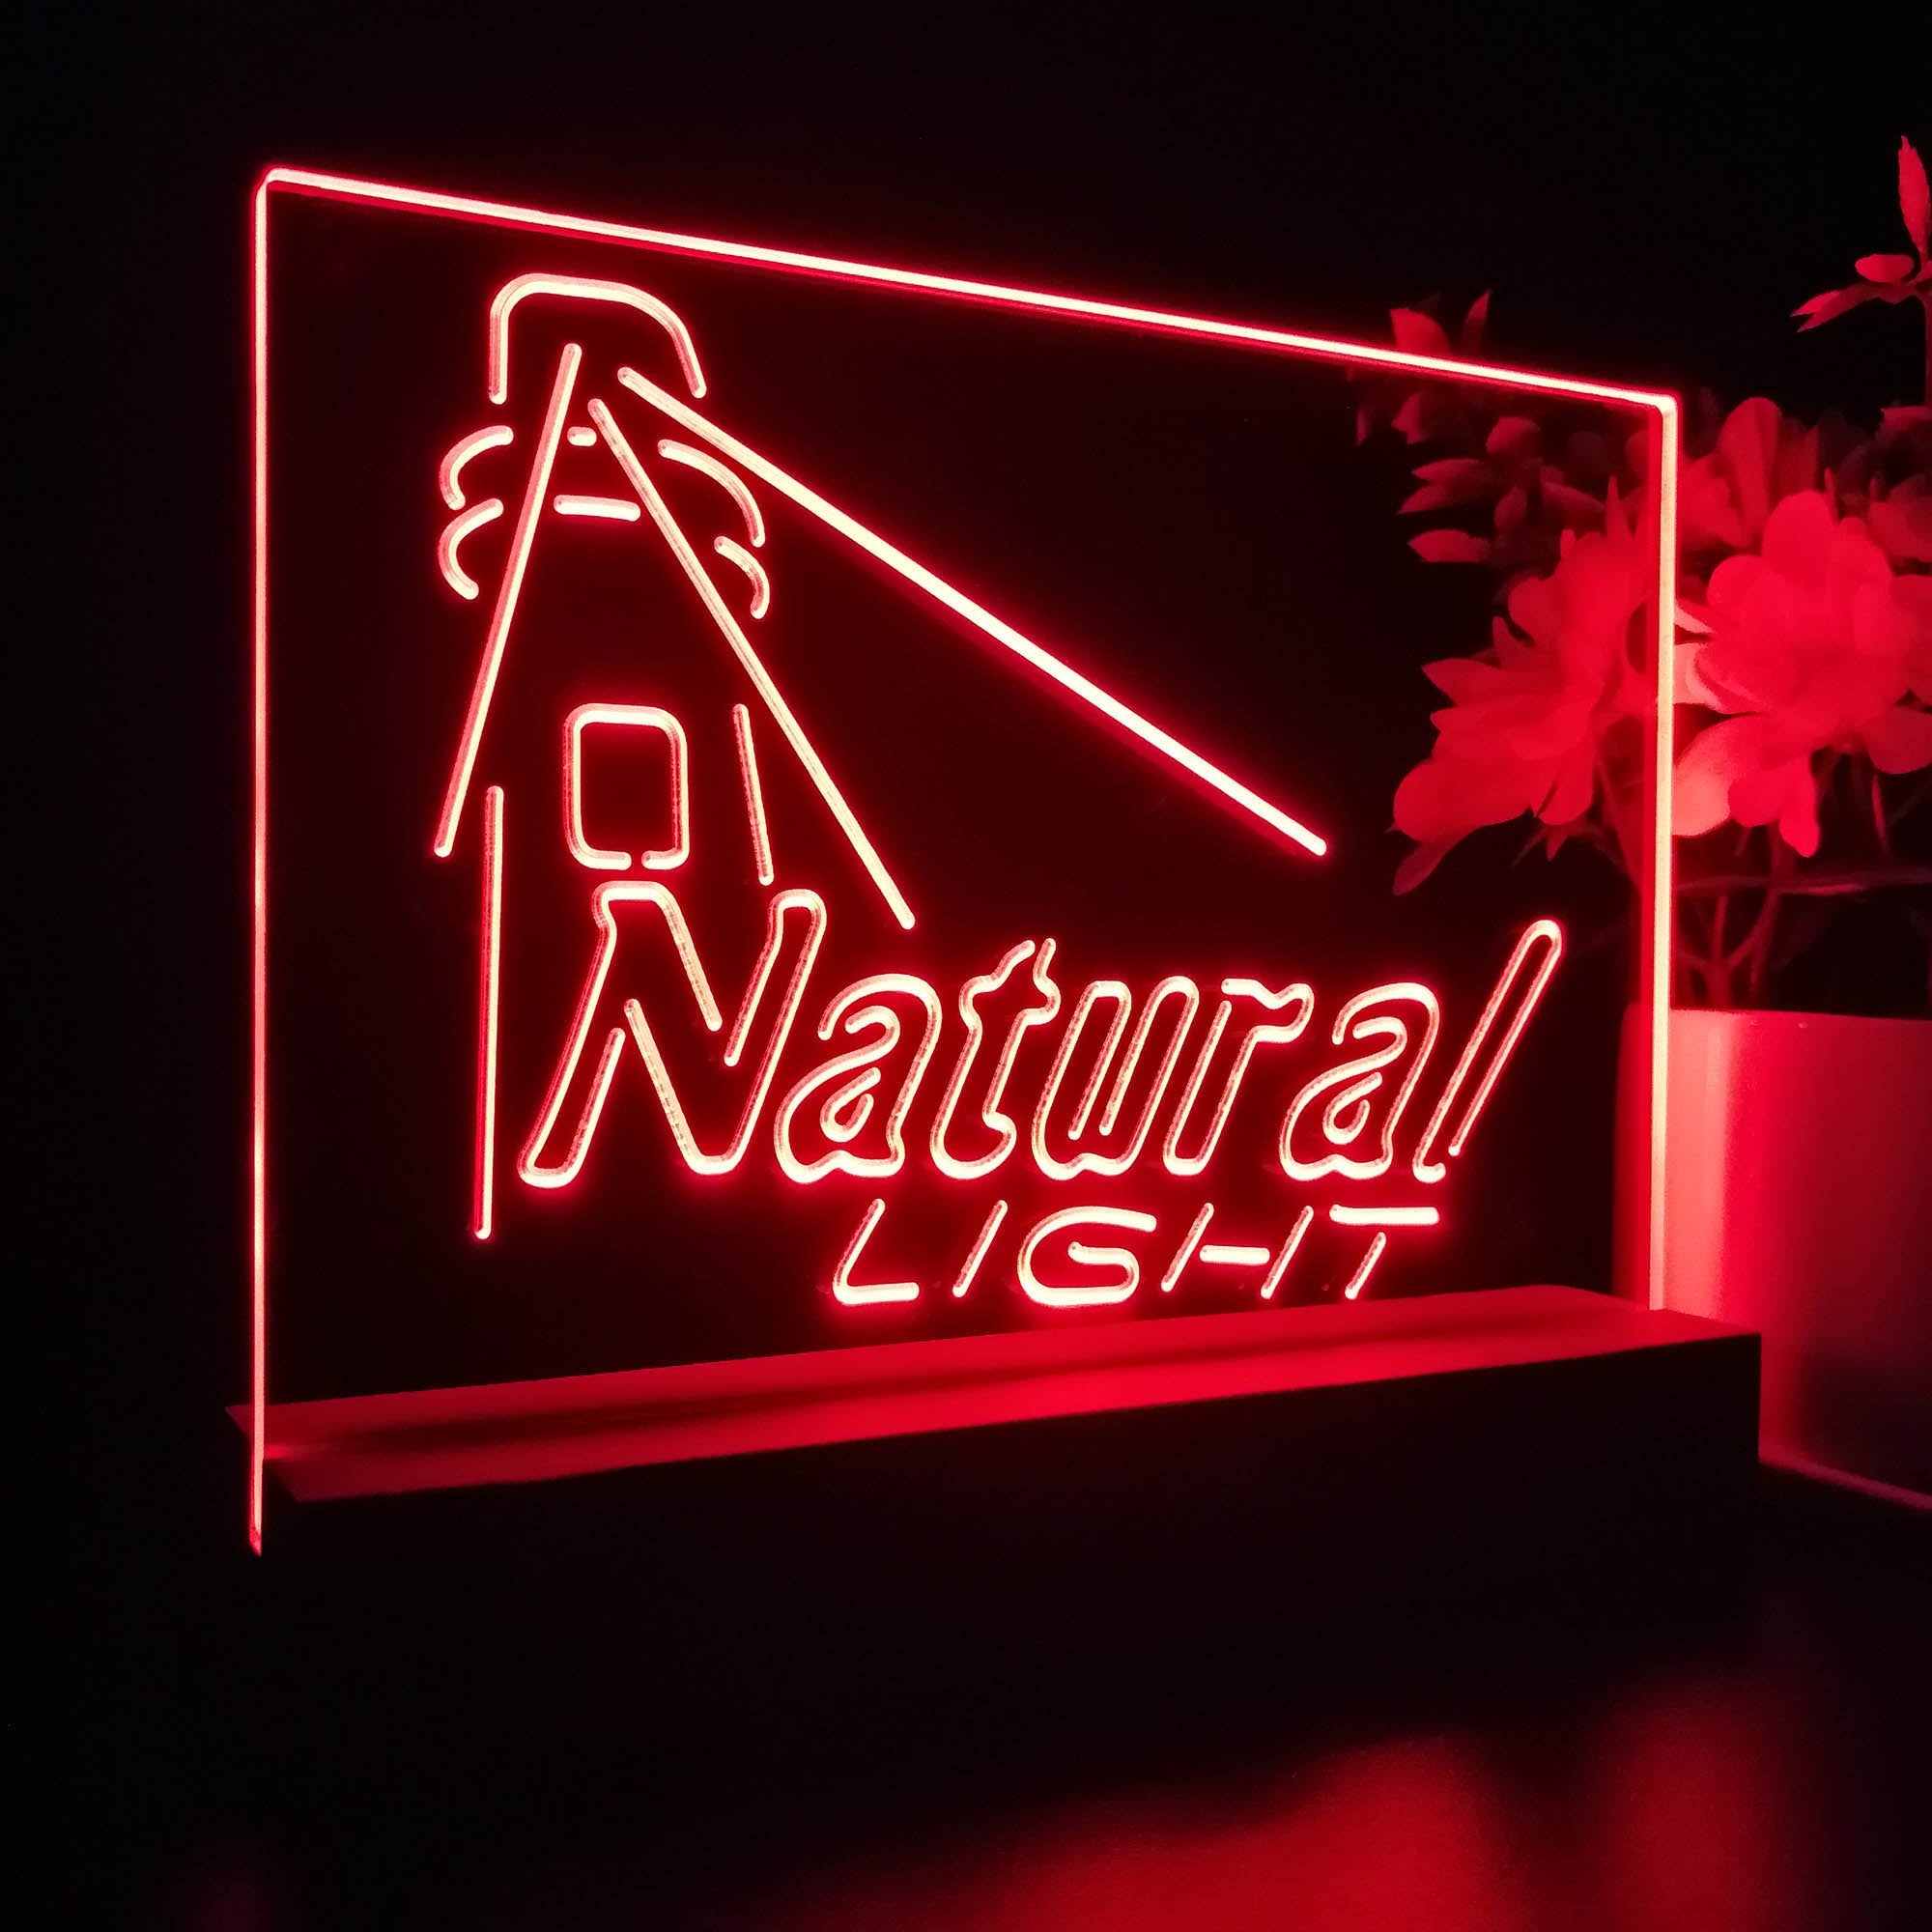 Natural Light Lighthouse Neon Sign Pub Bar Decor Lamp